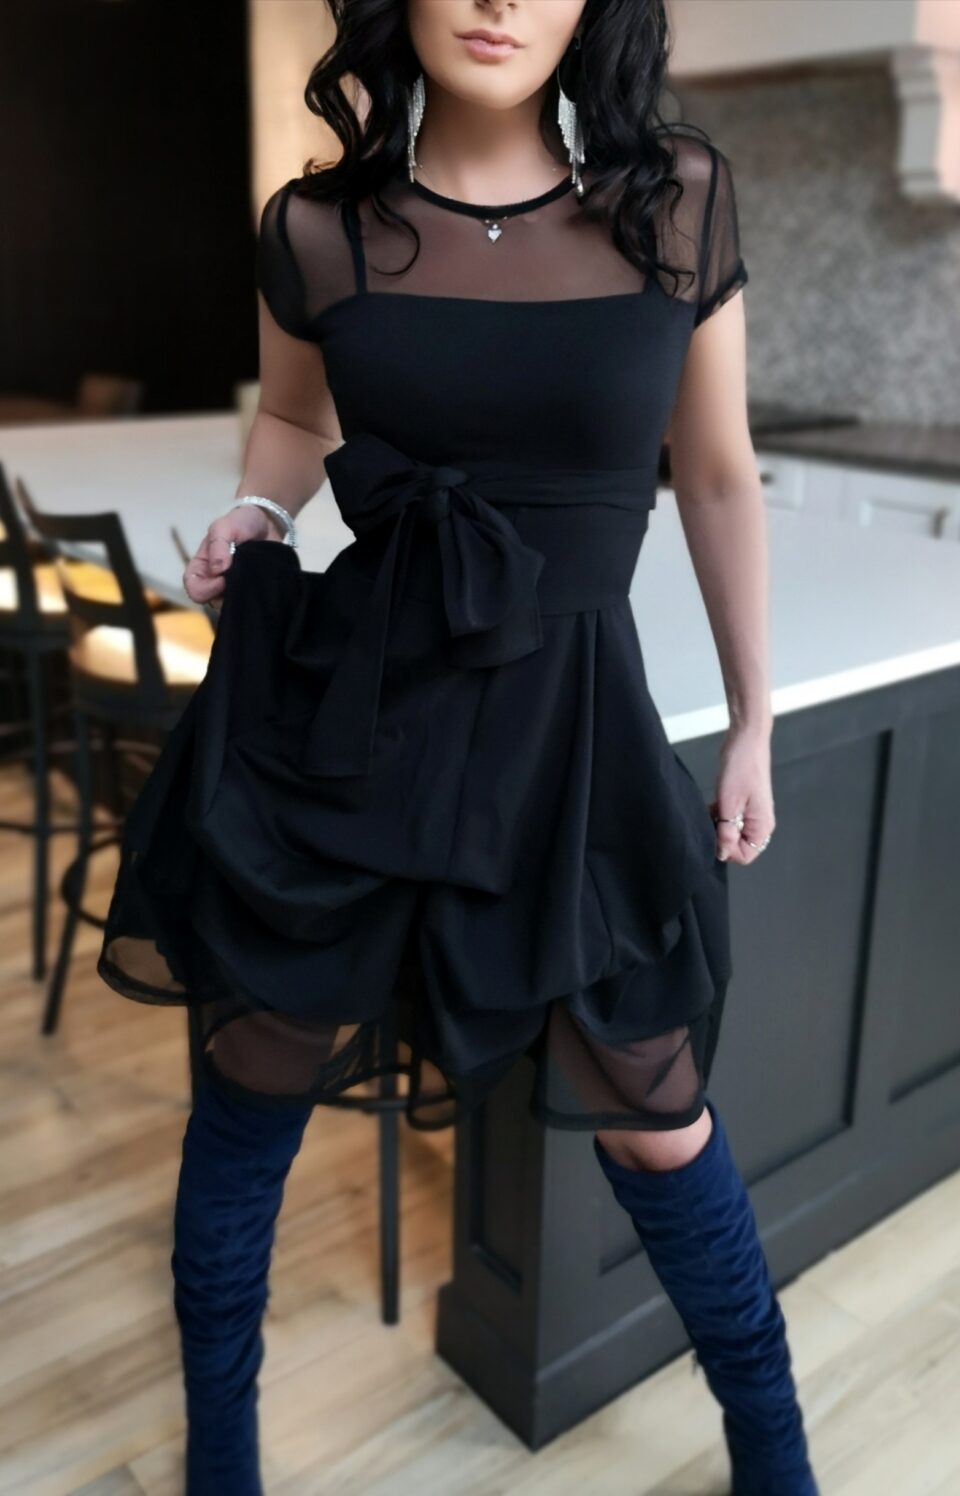 Short black bubble dress.